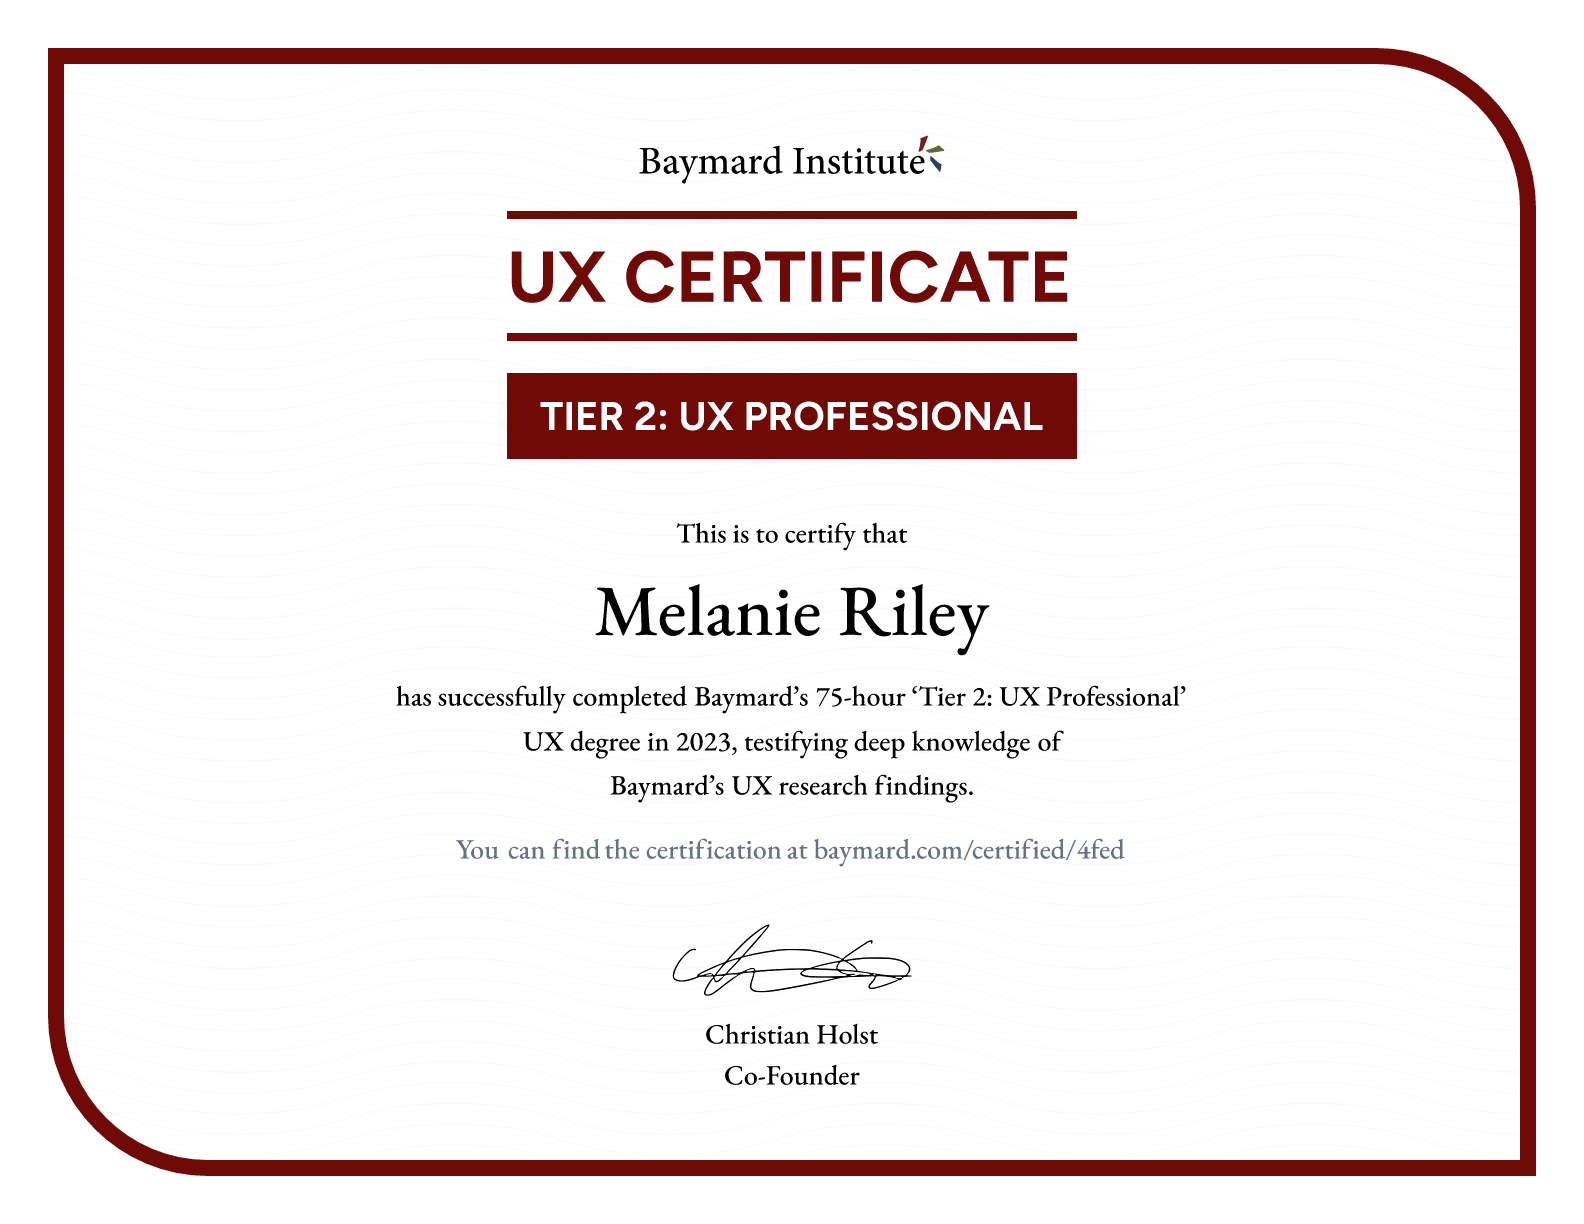 Melanie Riley’s certificate